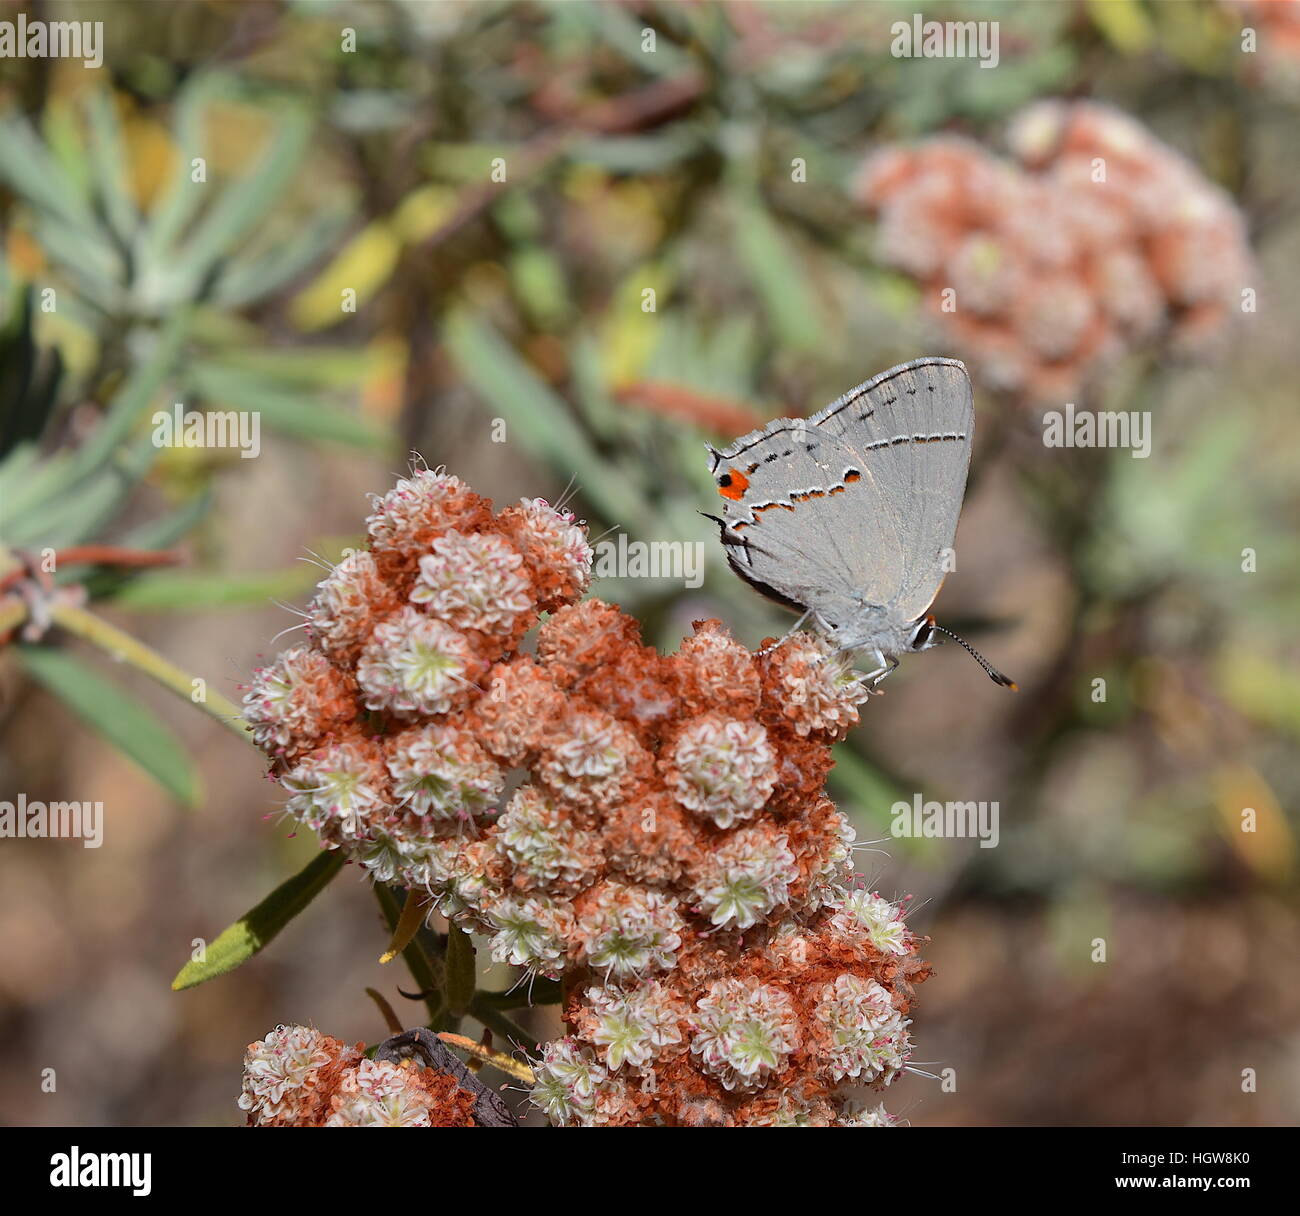 A Gray Hairstreak Butterfly Feeding On Santa Cruz Island Buckwheat